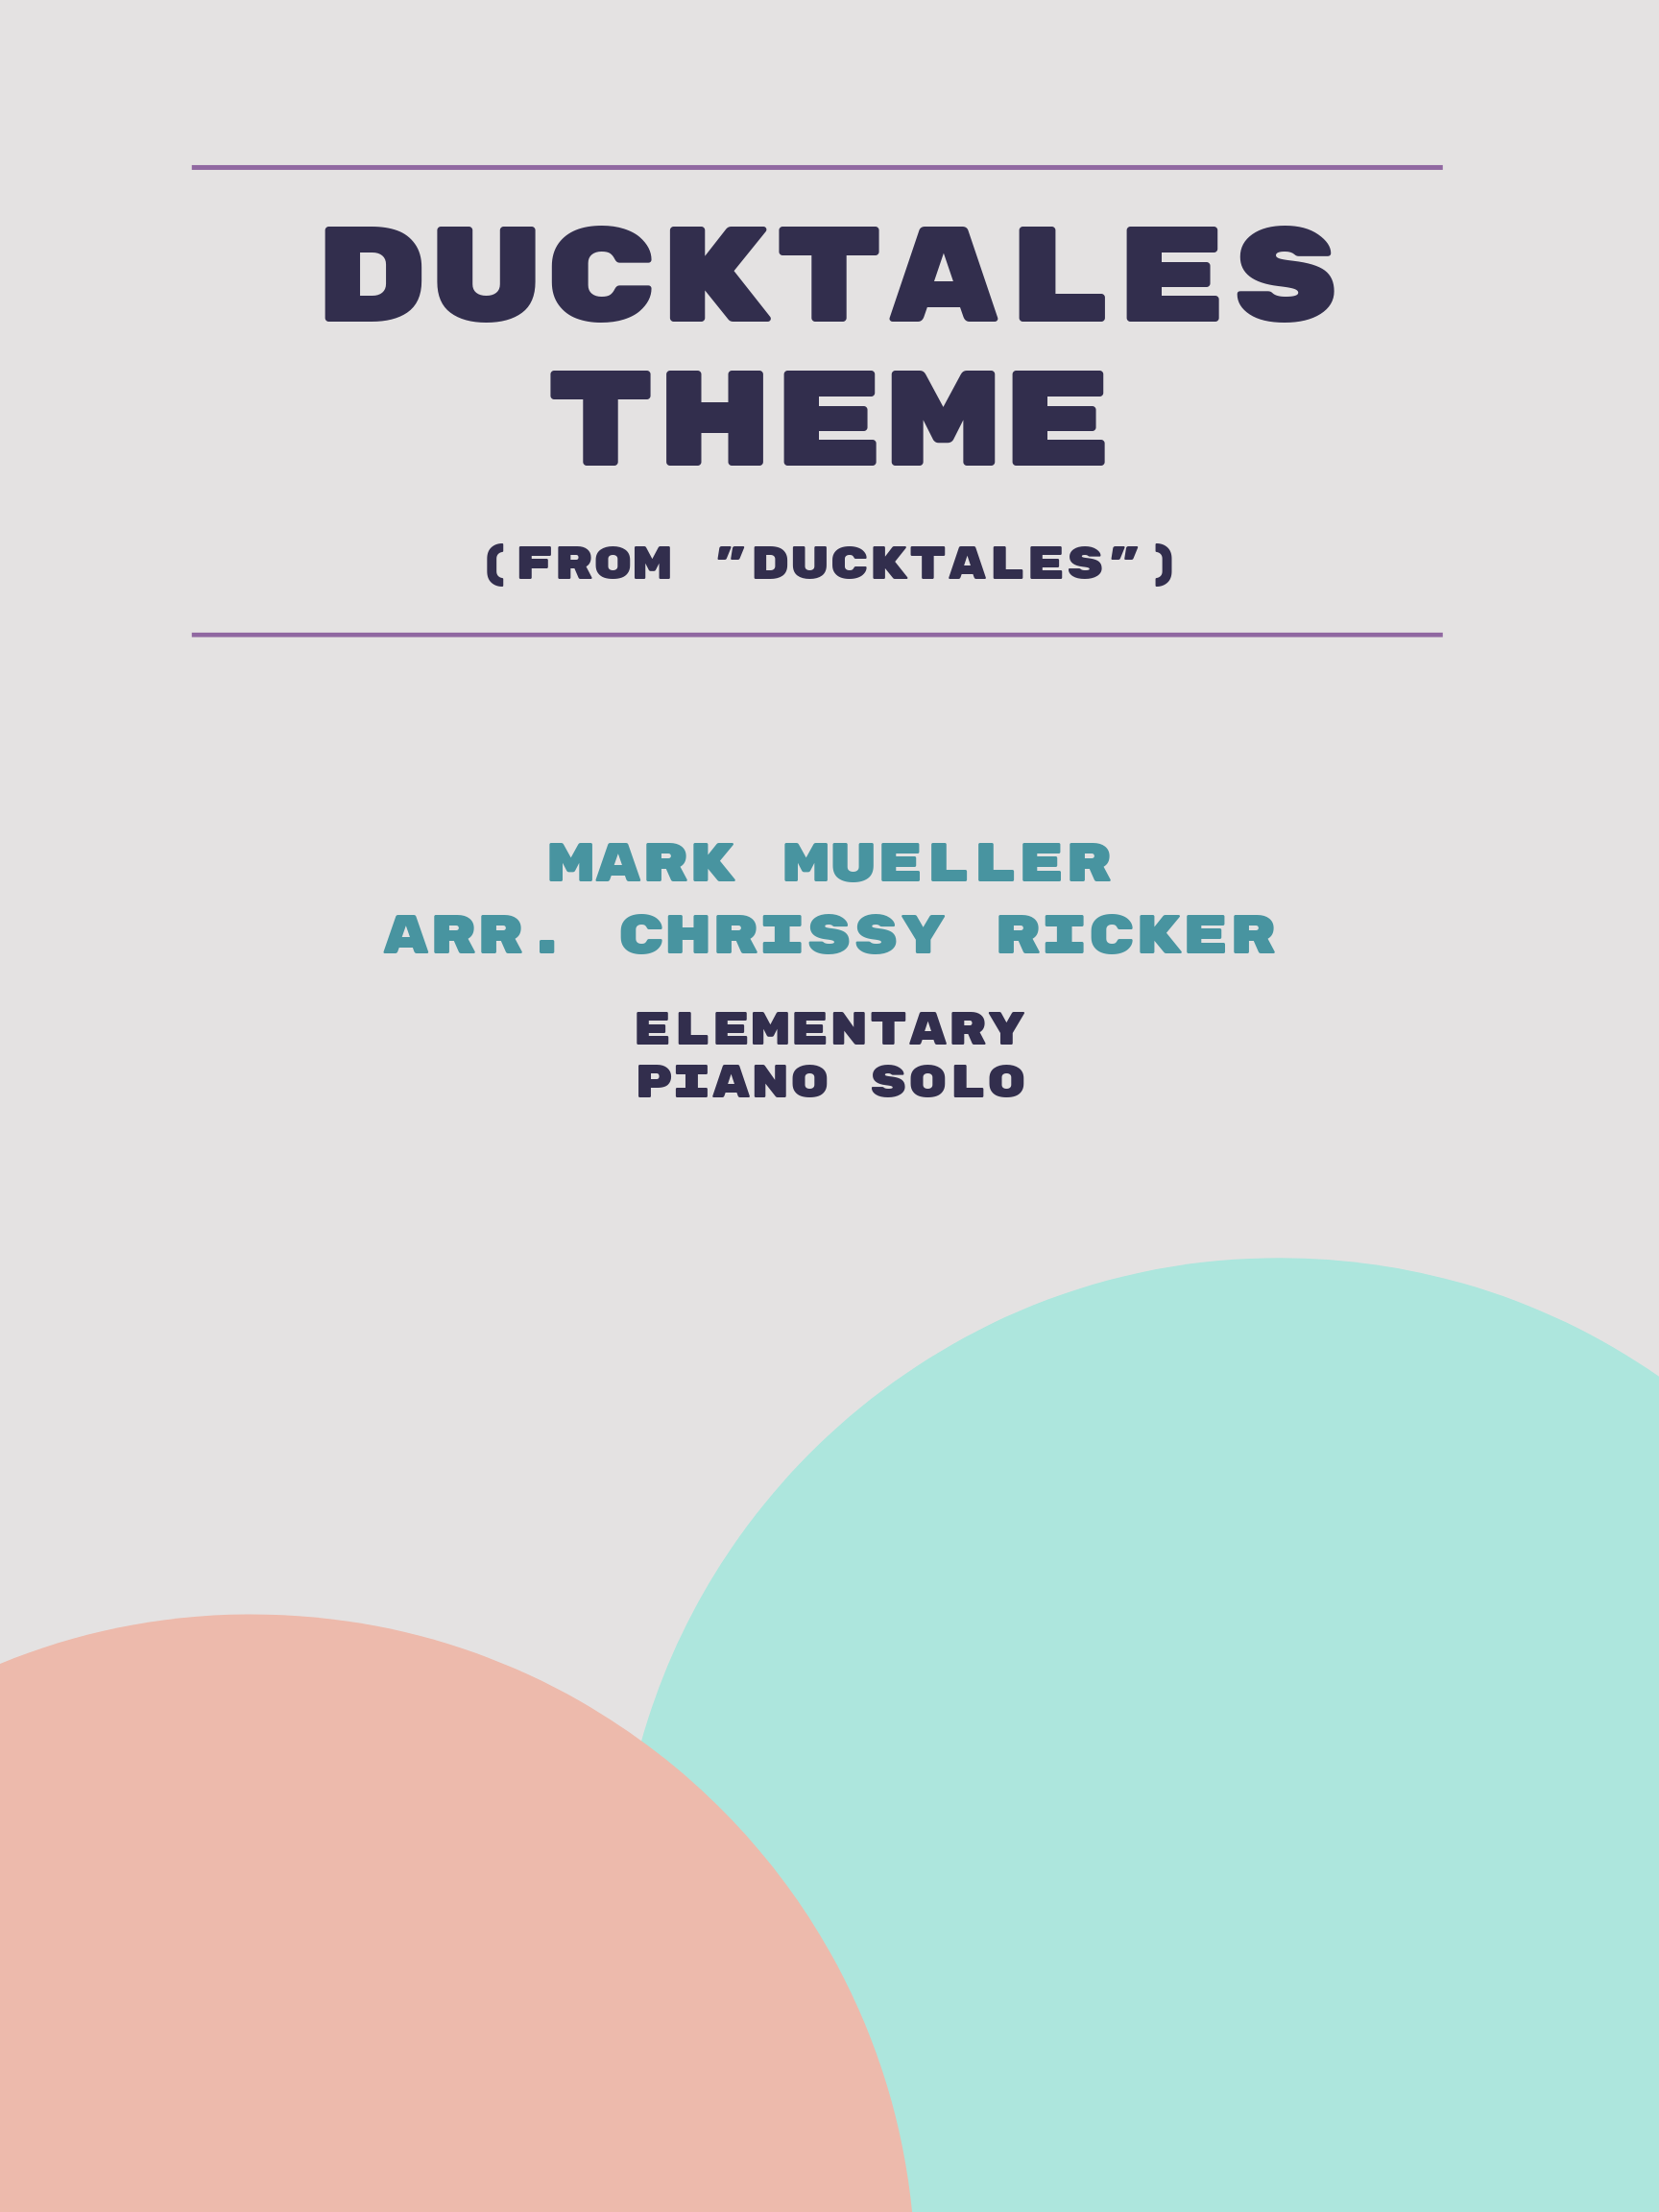 DuckTales Theme by Mark Mueller